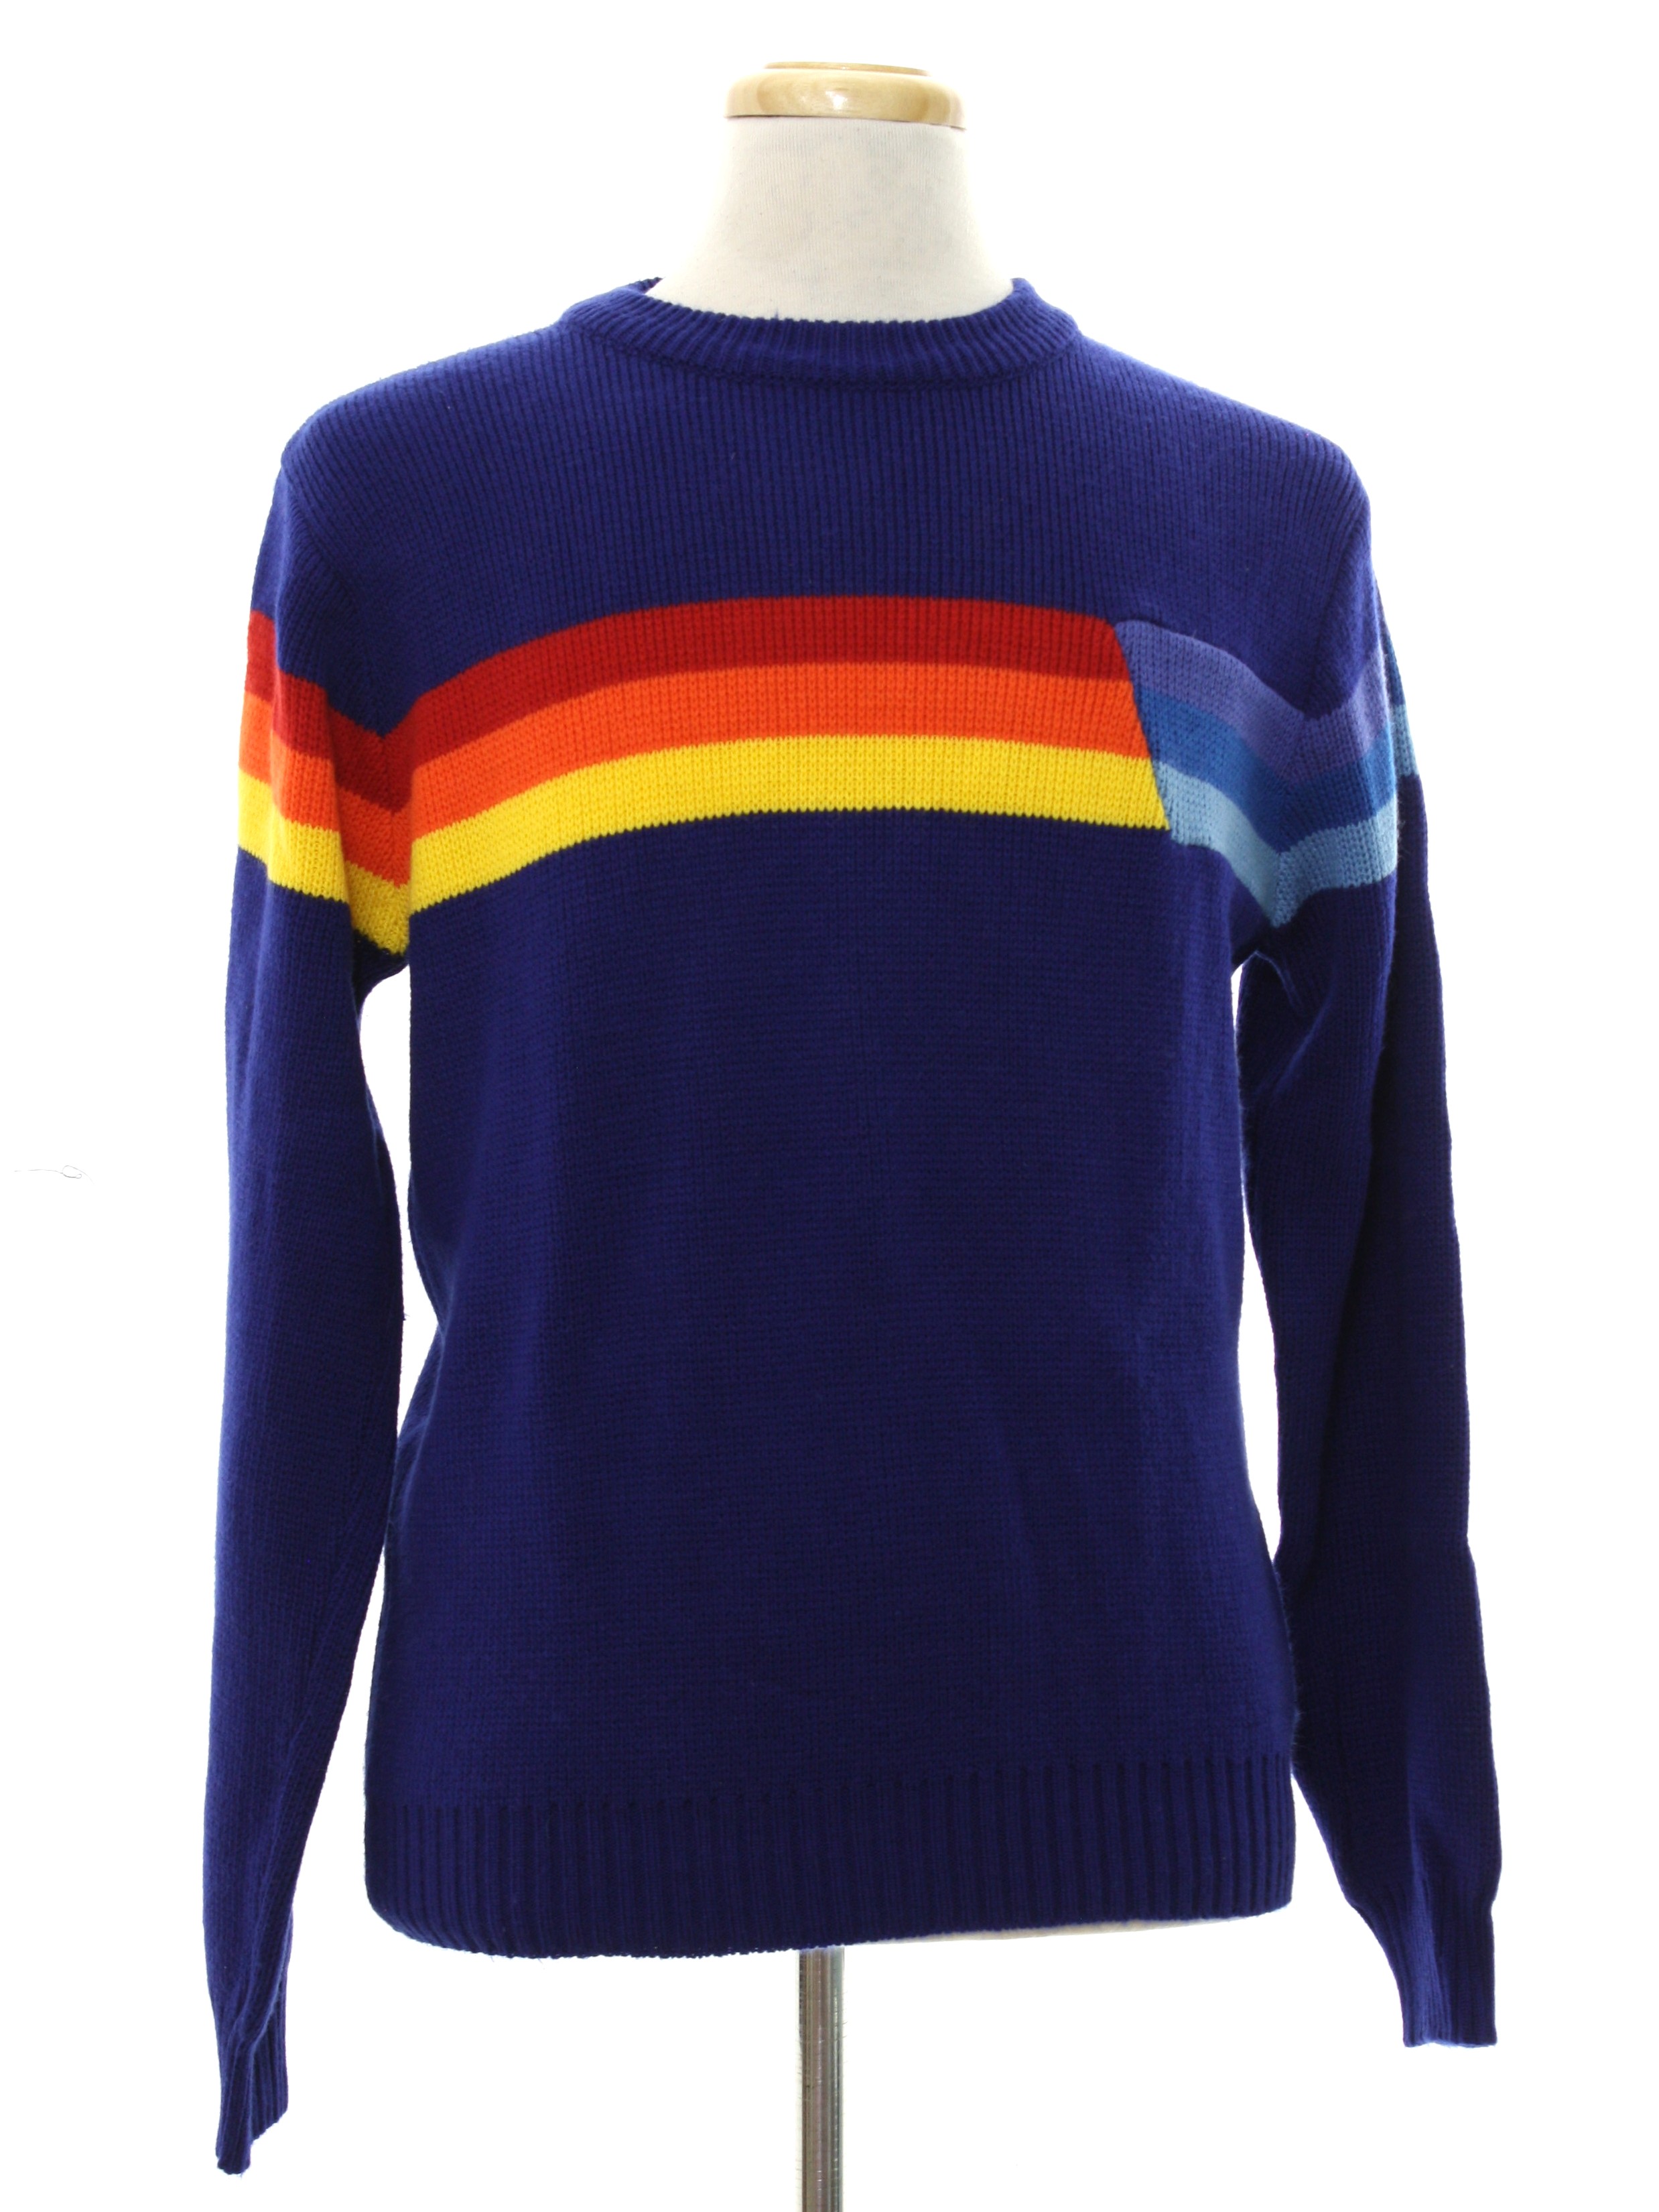 Retro 1980's Sweater (High Sierra) : 80s -High Sierra- Mens navy blue ...